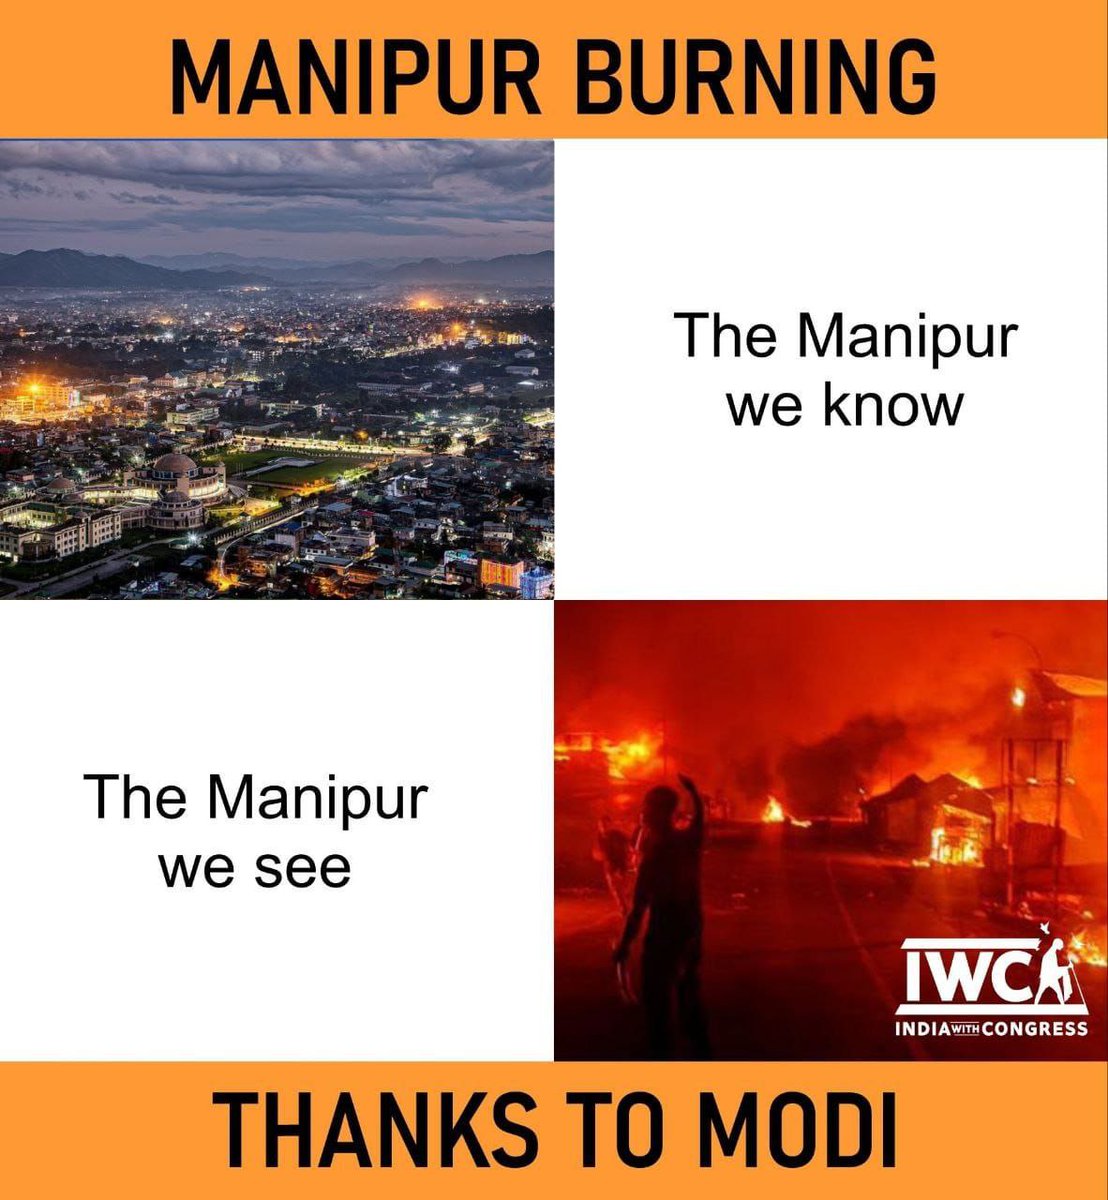 Panauti has ruined each and everything.
A beautiful Manipur is now a morgue.

#ModiHaiTohVinaashHai 
#ManipurCivilWar
#ManipurBurning
#ModiThankYou